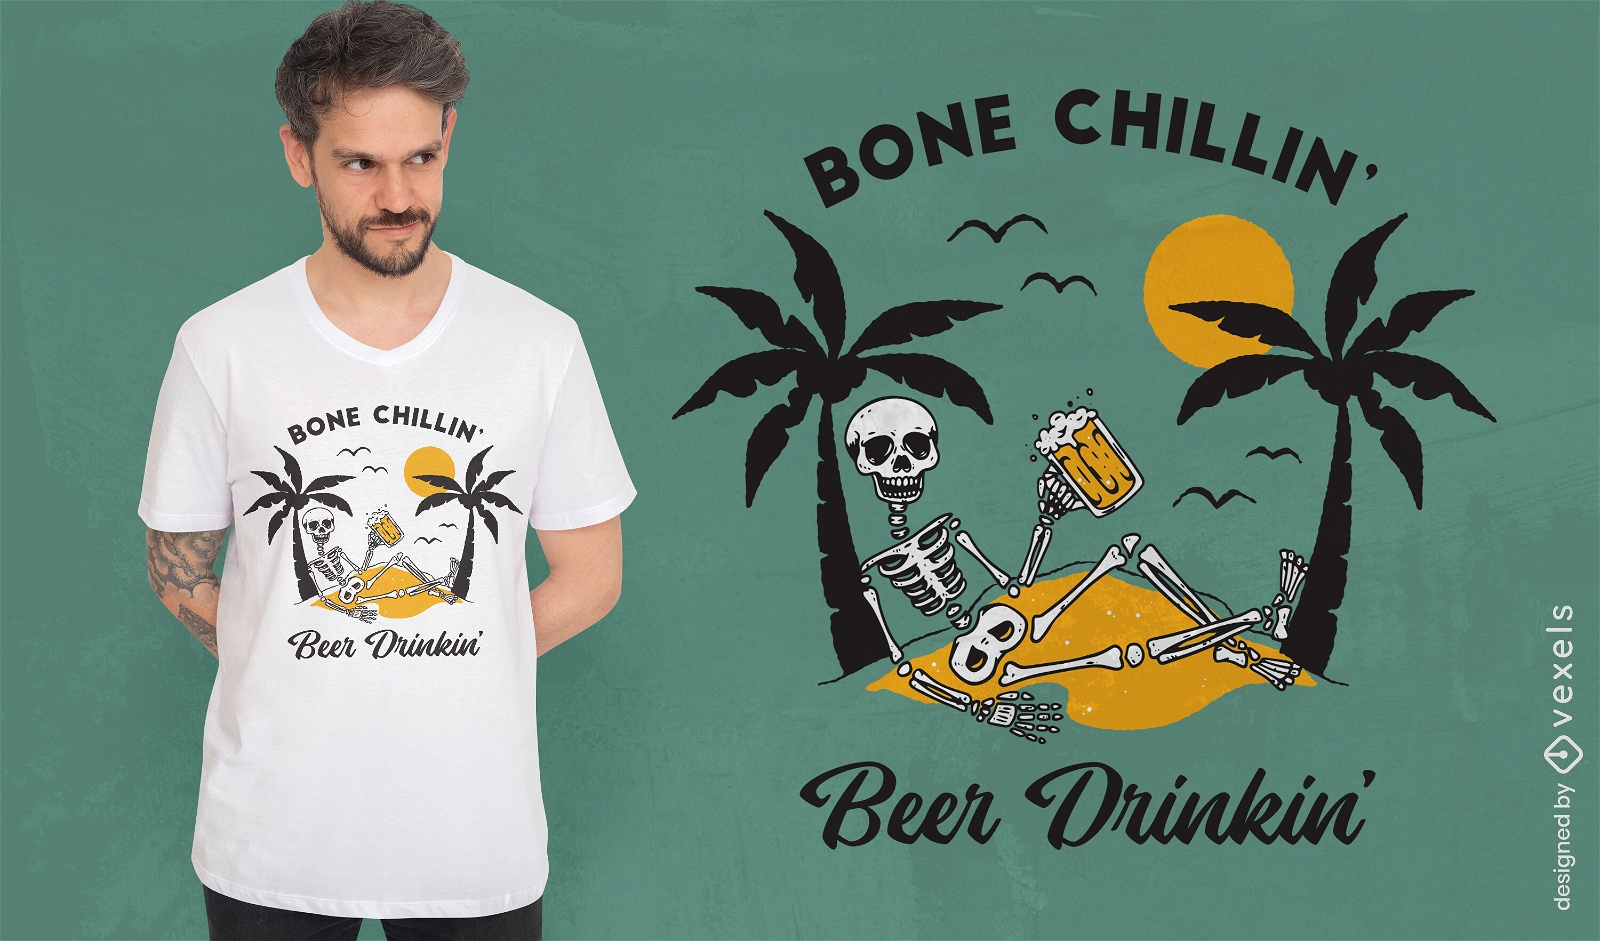 Skeleton drinking beer on beach t-shirt design